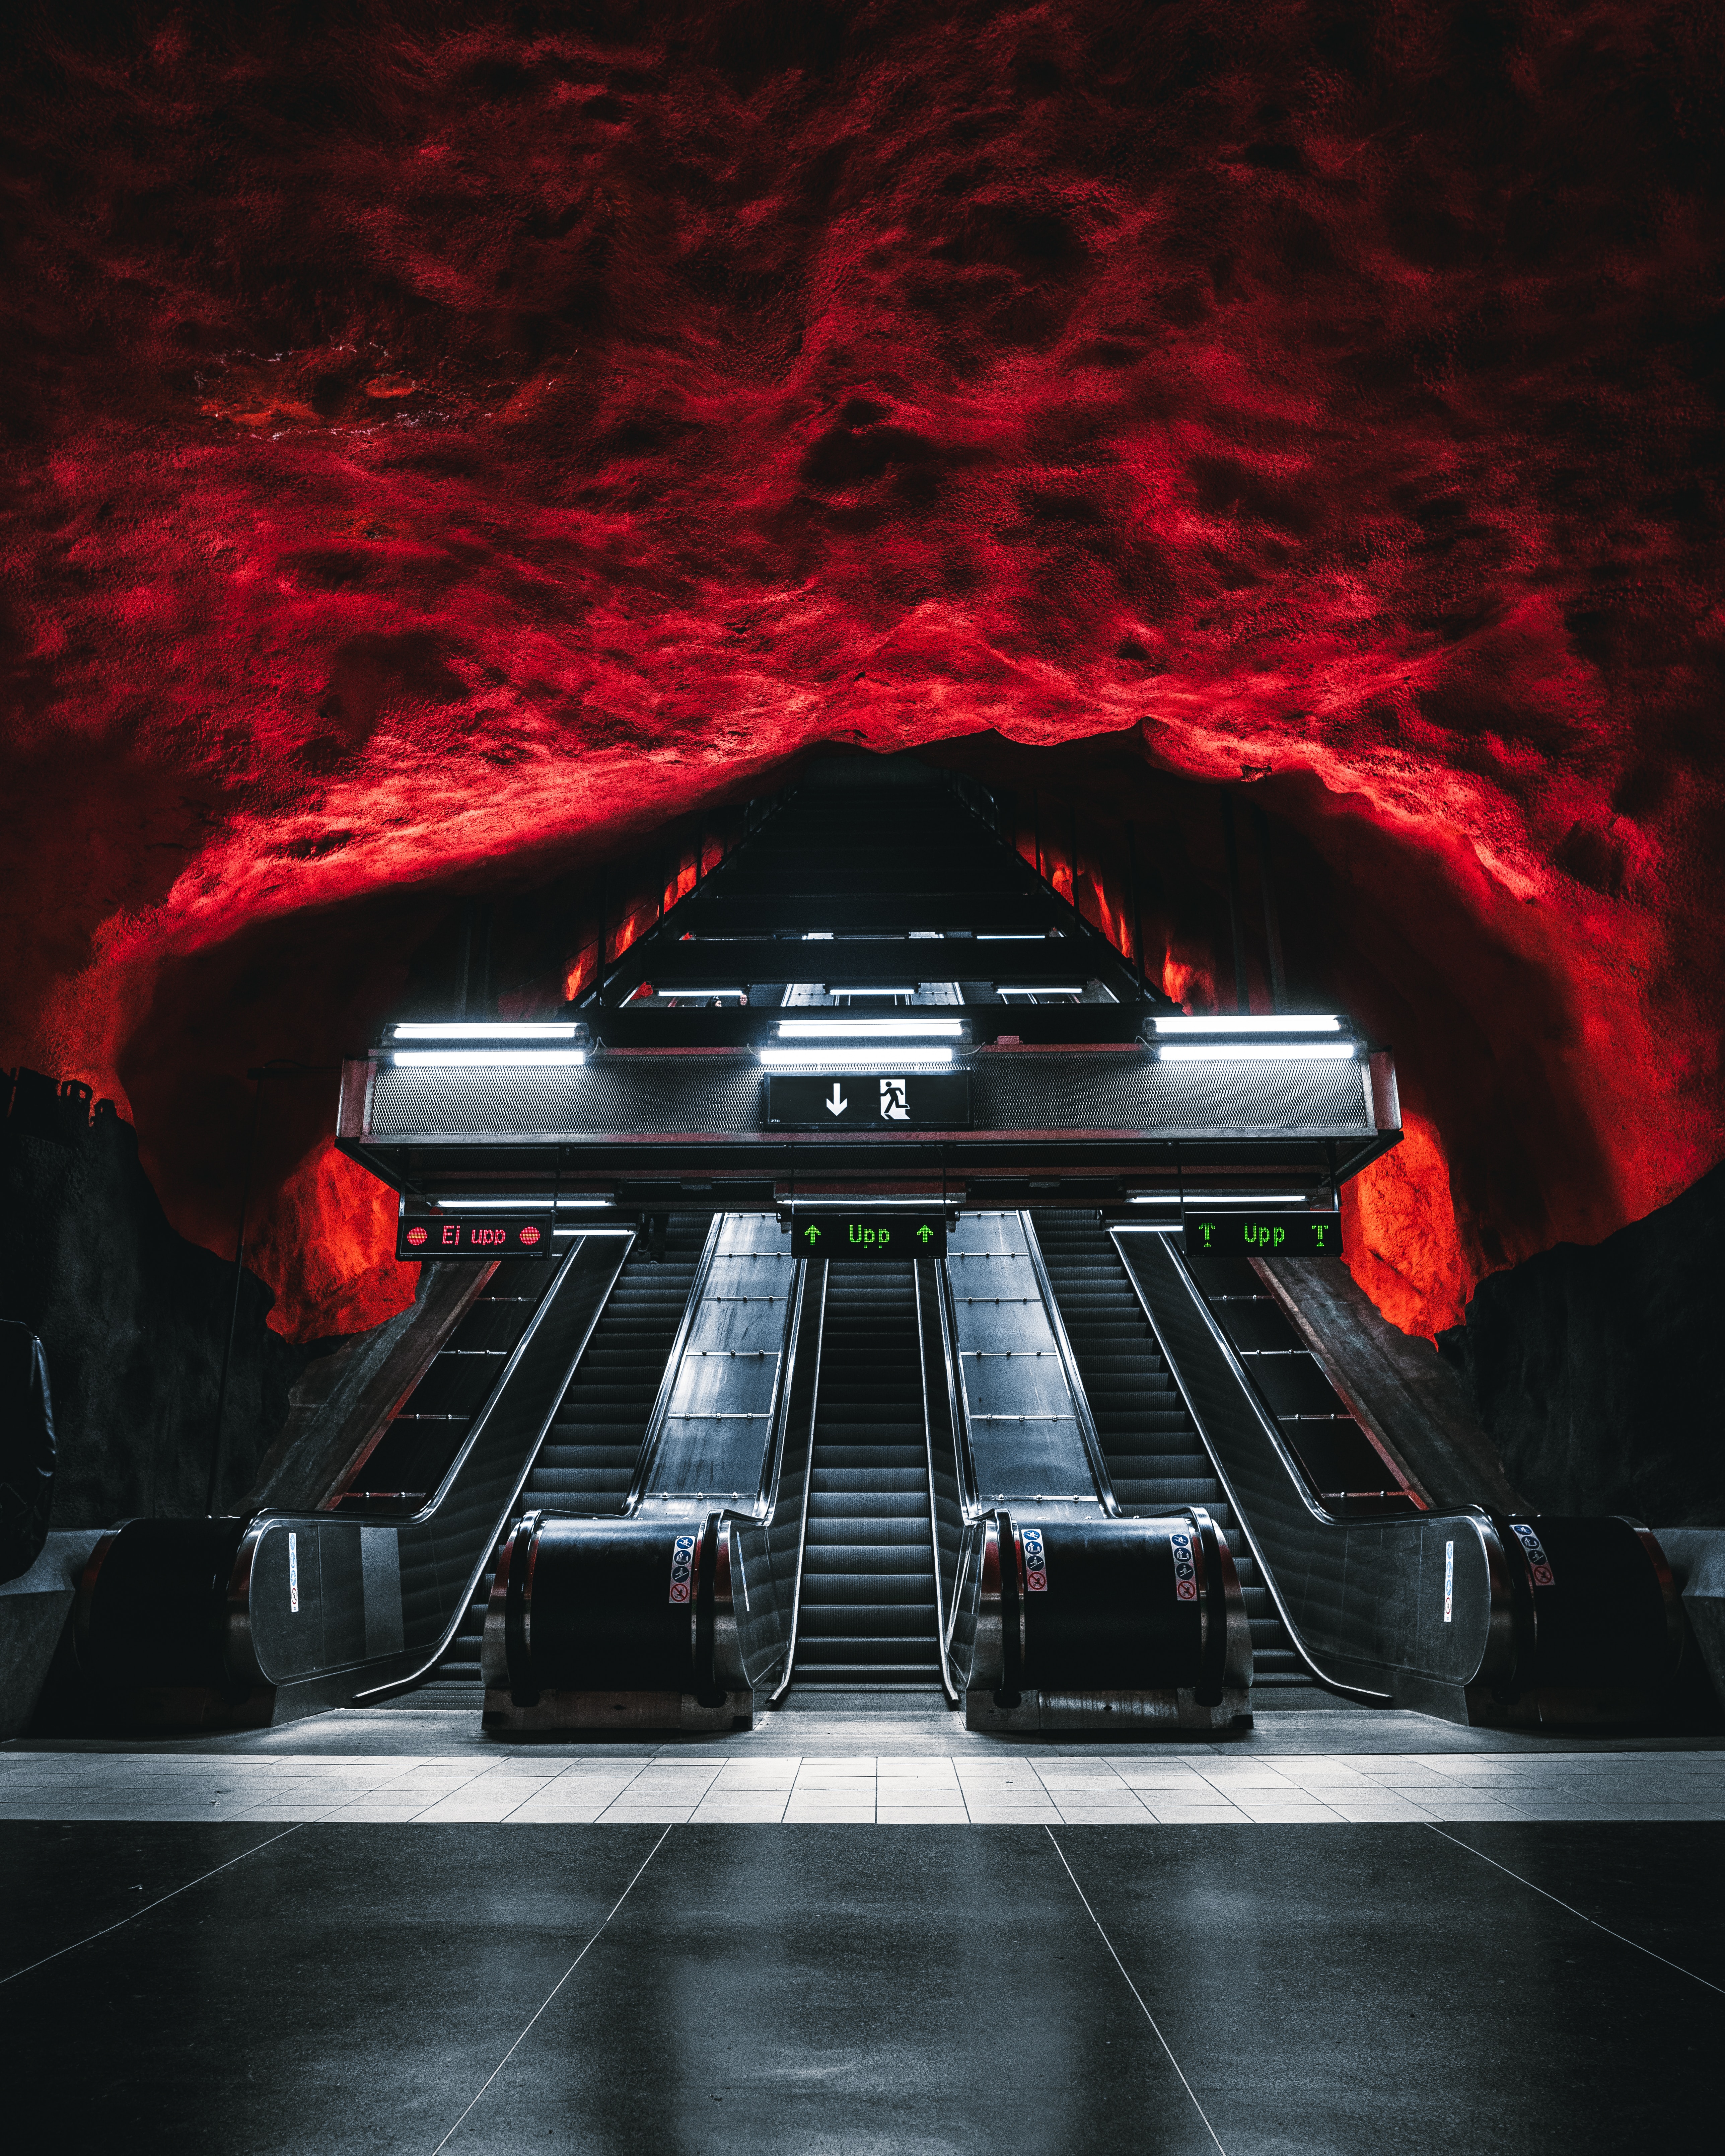 tunnel, dark, miscellanea, miscellaneous, underground, metro, subway, escalator